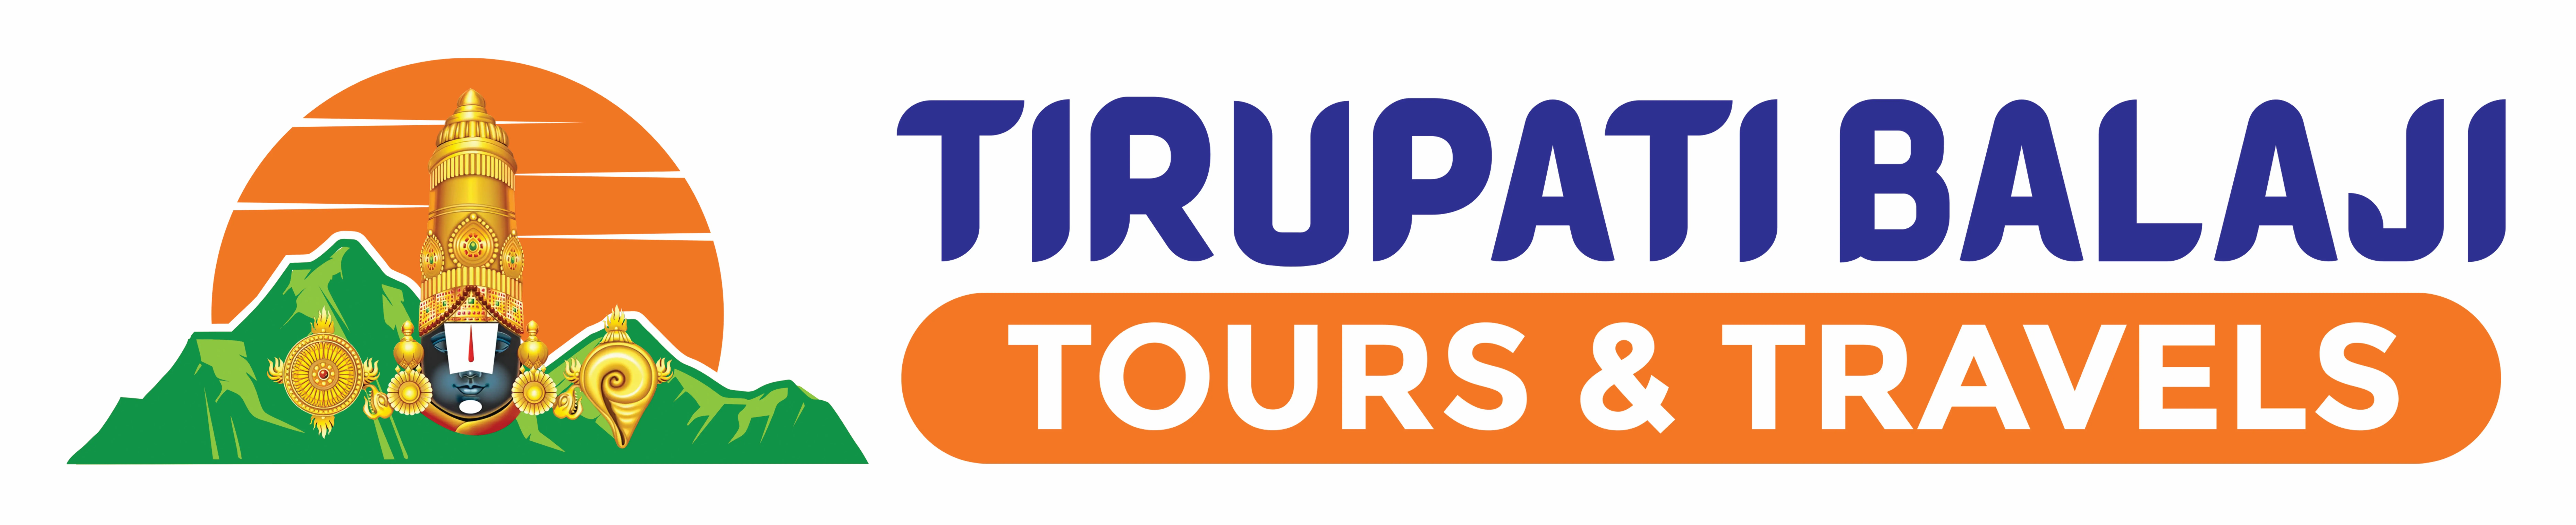 Tirupati balaji tours travels